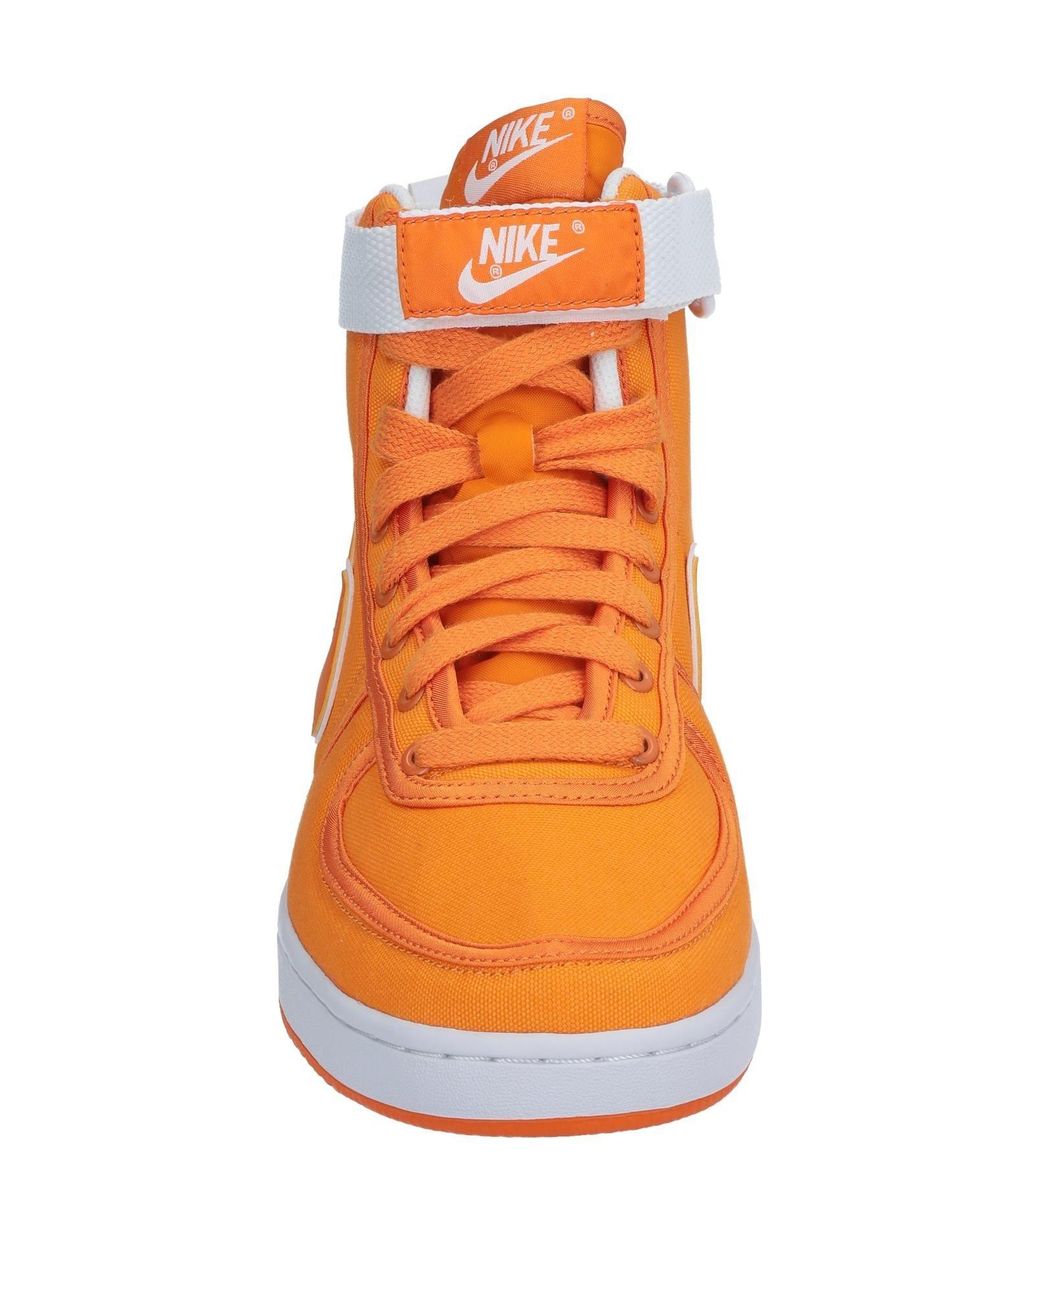 Nike High-tops & Sneakers in Orange for Men | Lyst